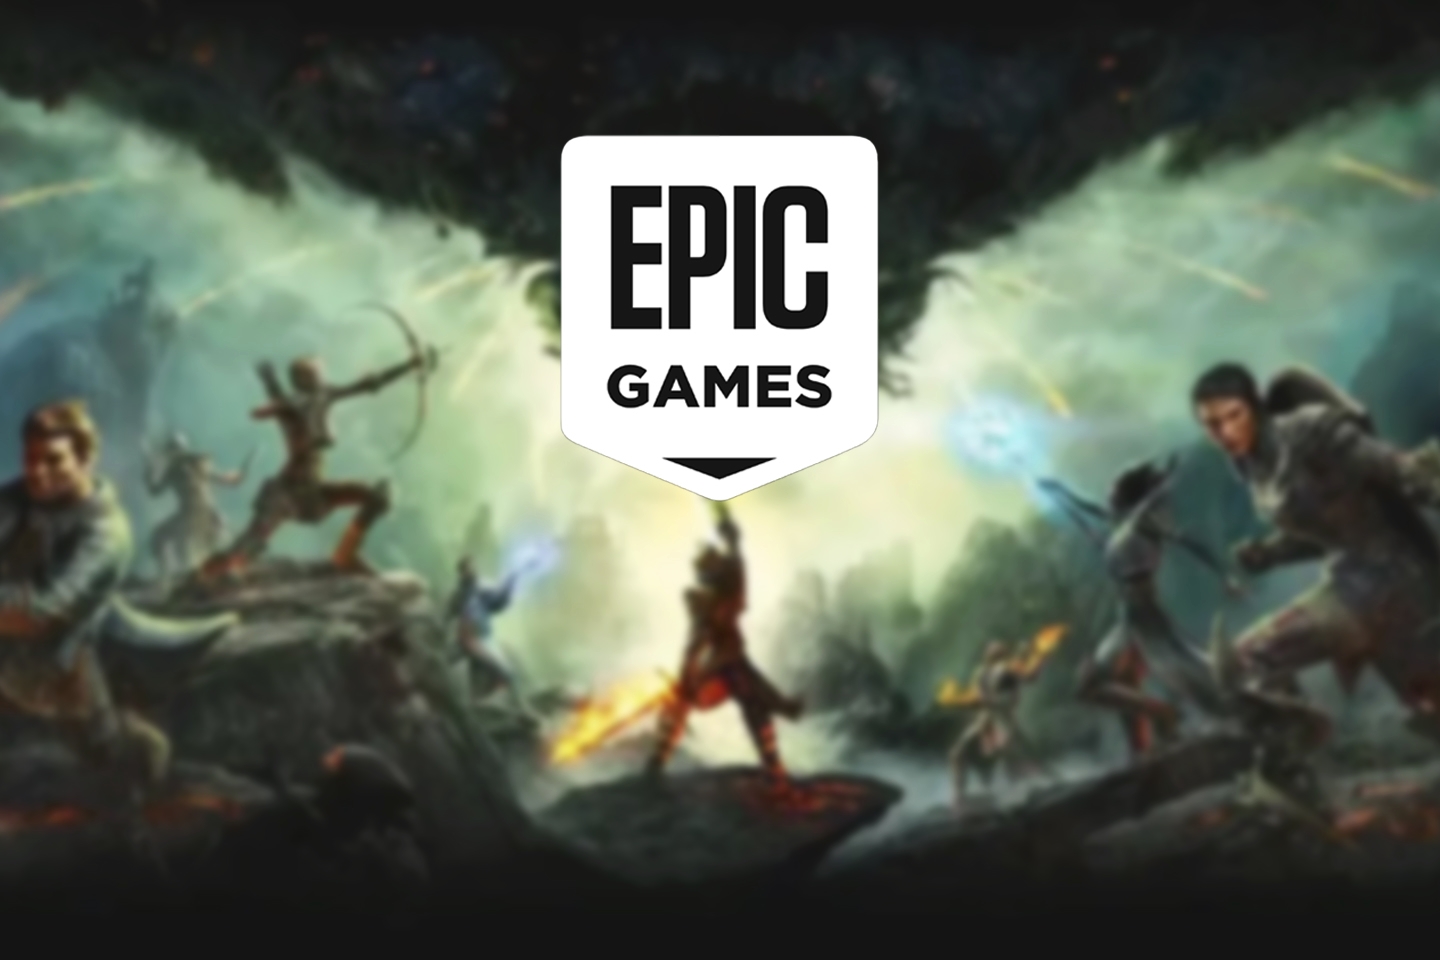 Epic Games libera RPG aclamado de graça nesta quinta (16); resgate aqui!